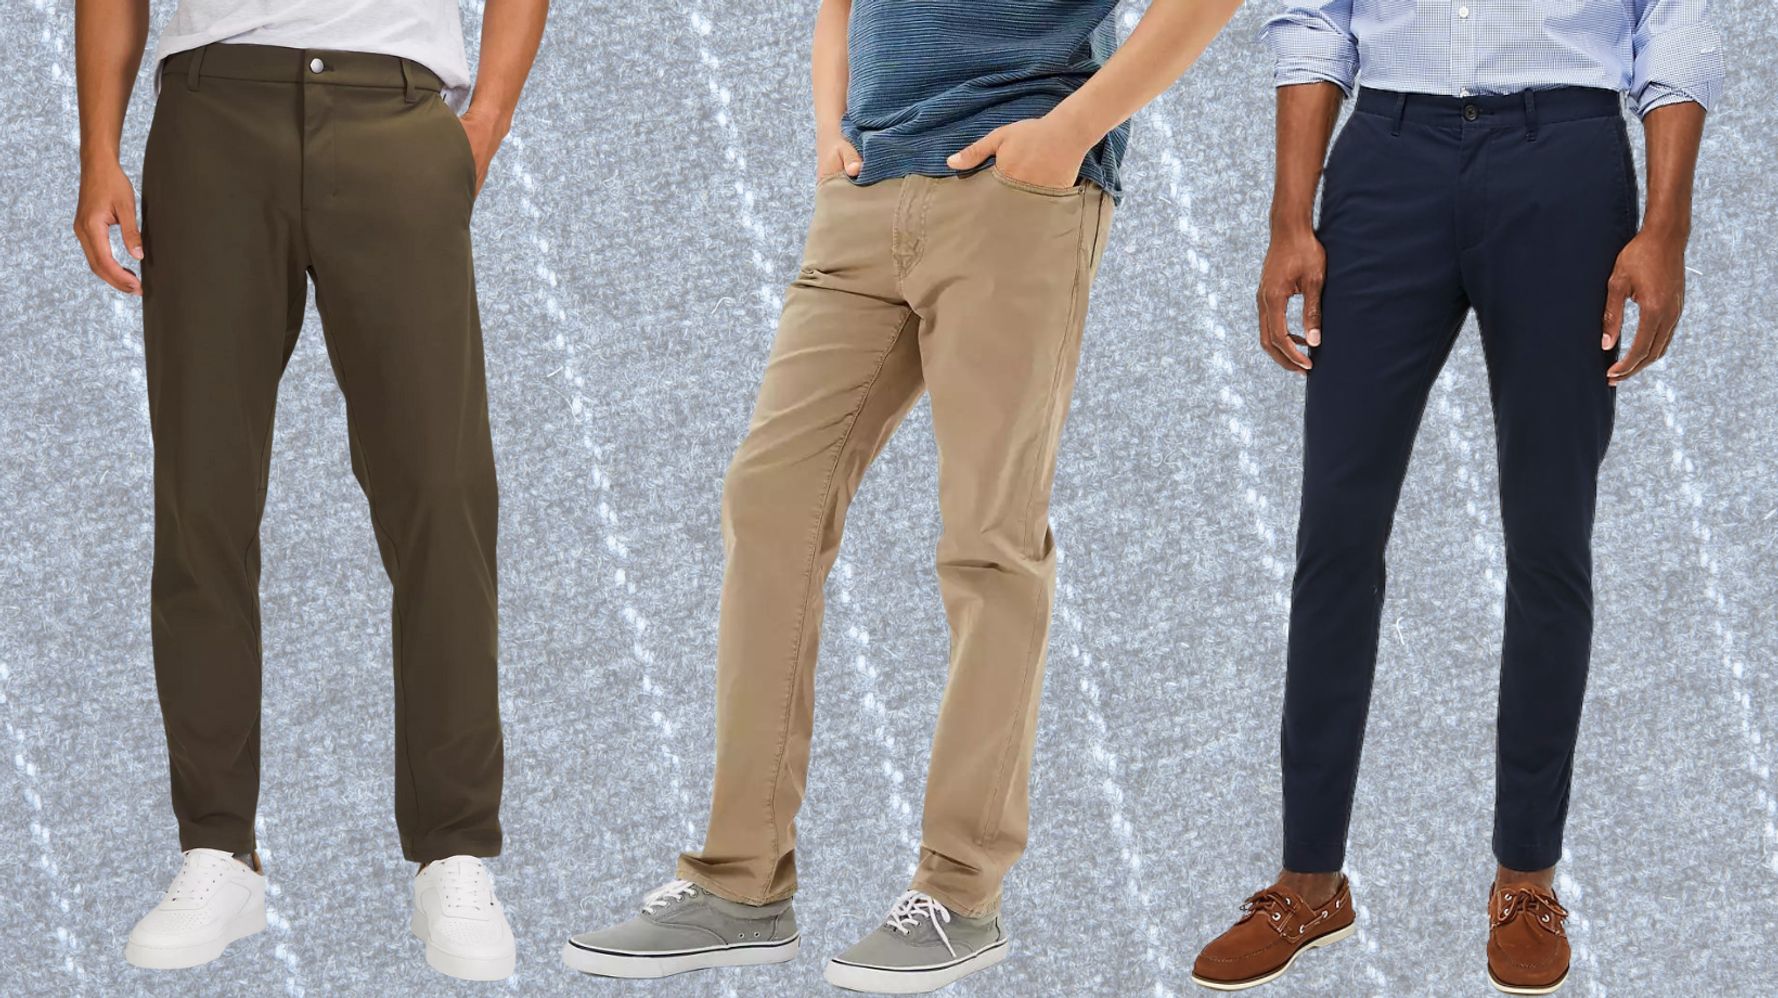 Men's 4-Way Stretch Chino Slim Pants, Casual Work Pants